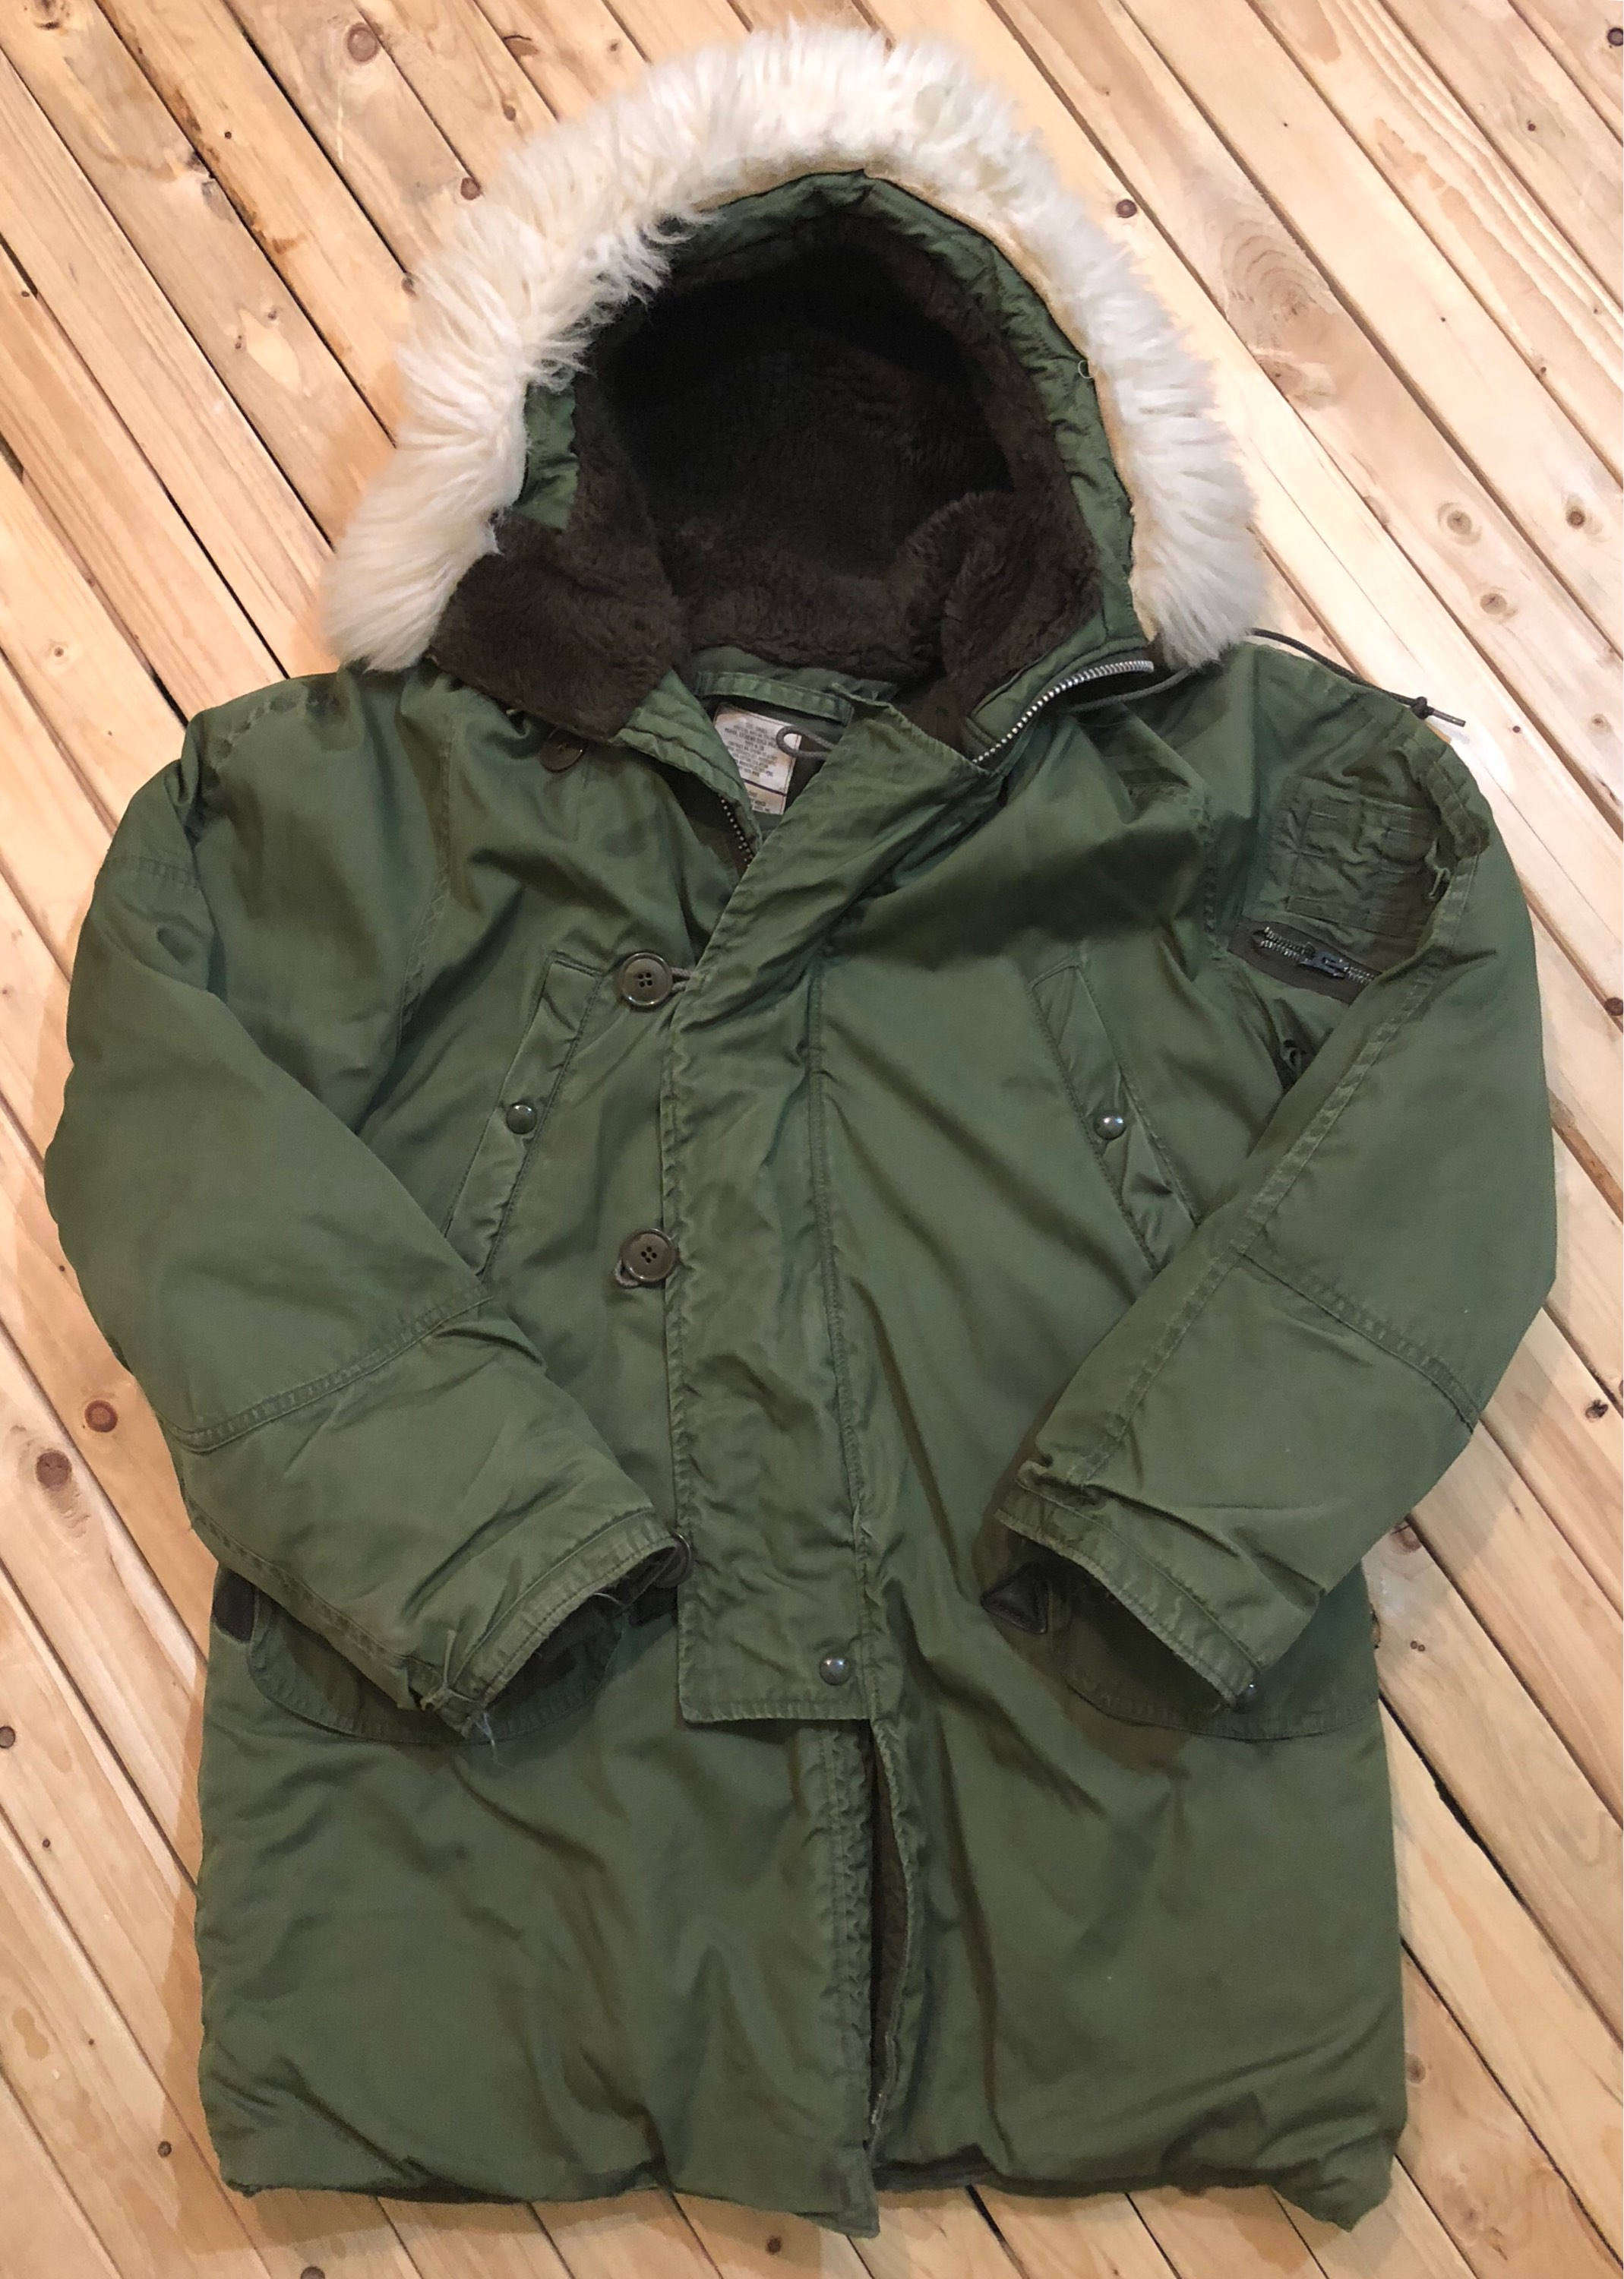 Extreme Weather Parka Type N - 3b Fur Hood